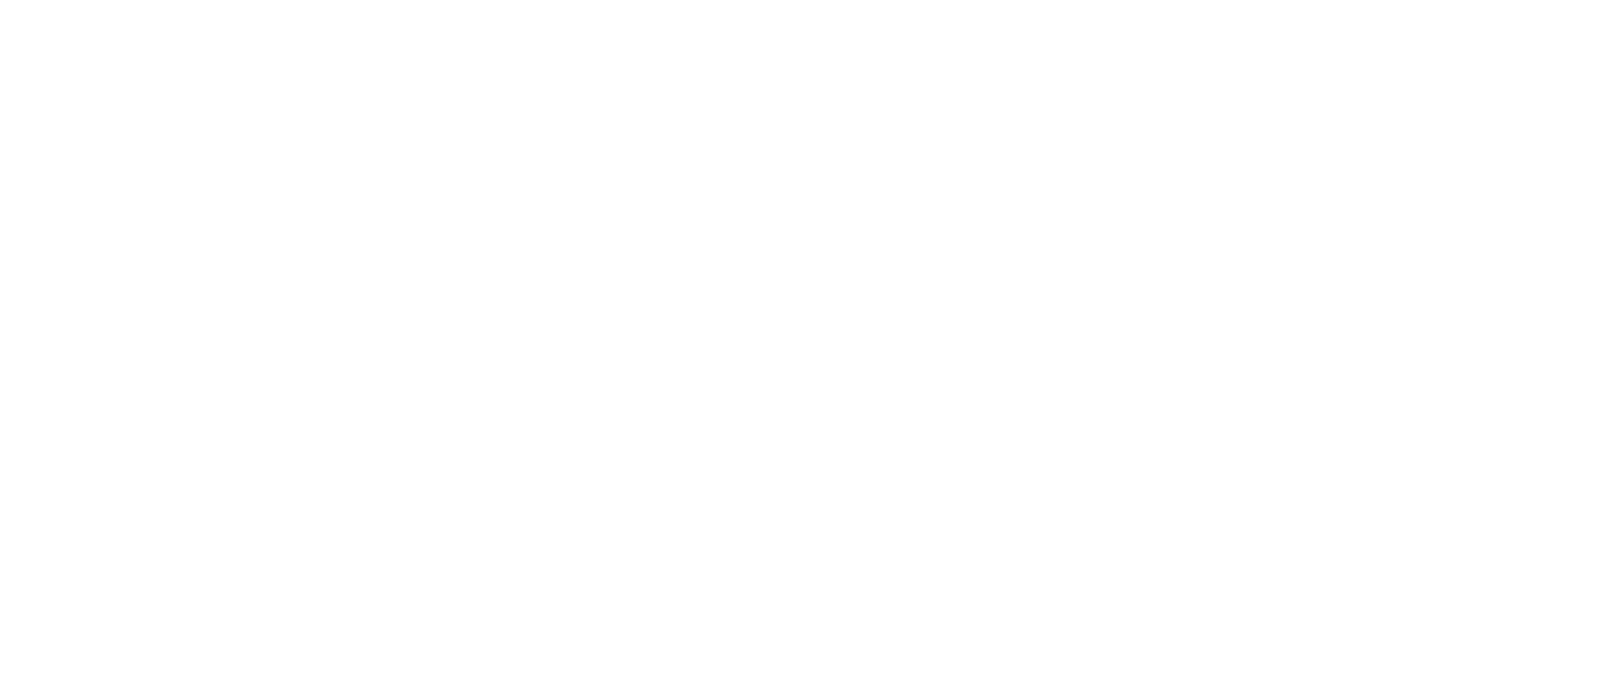 Dale Ranck Cremation & Funeral Care Logo